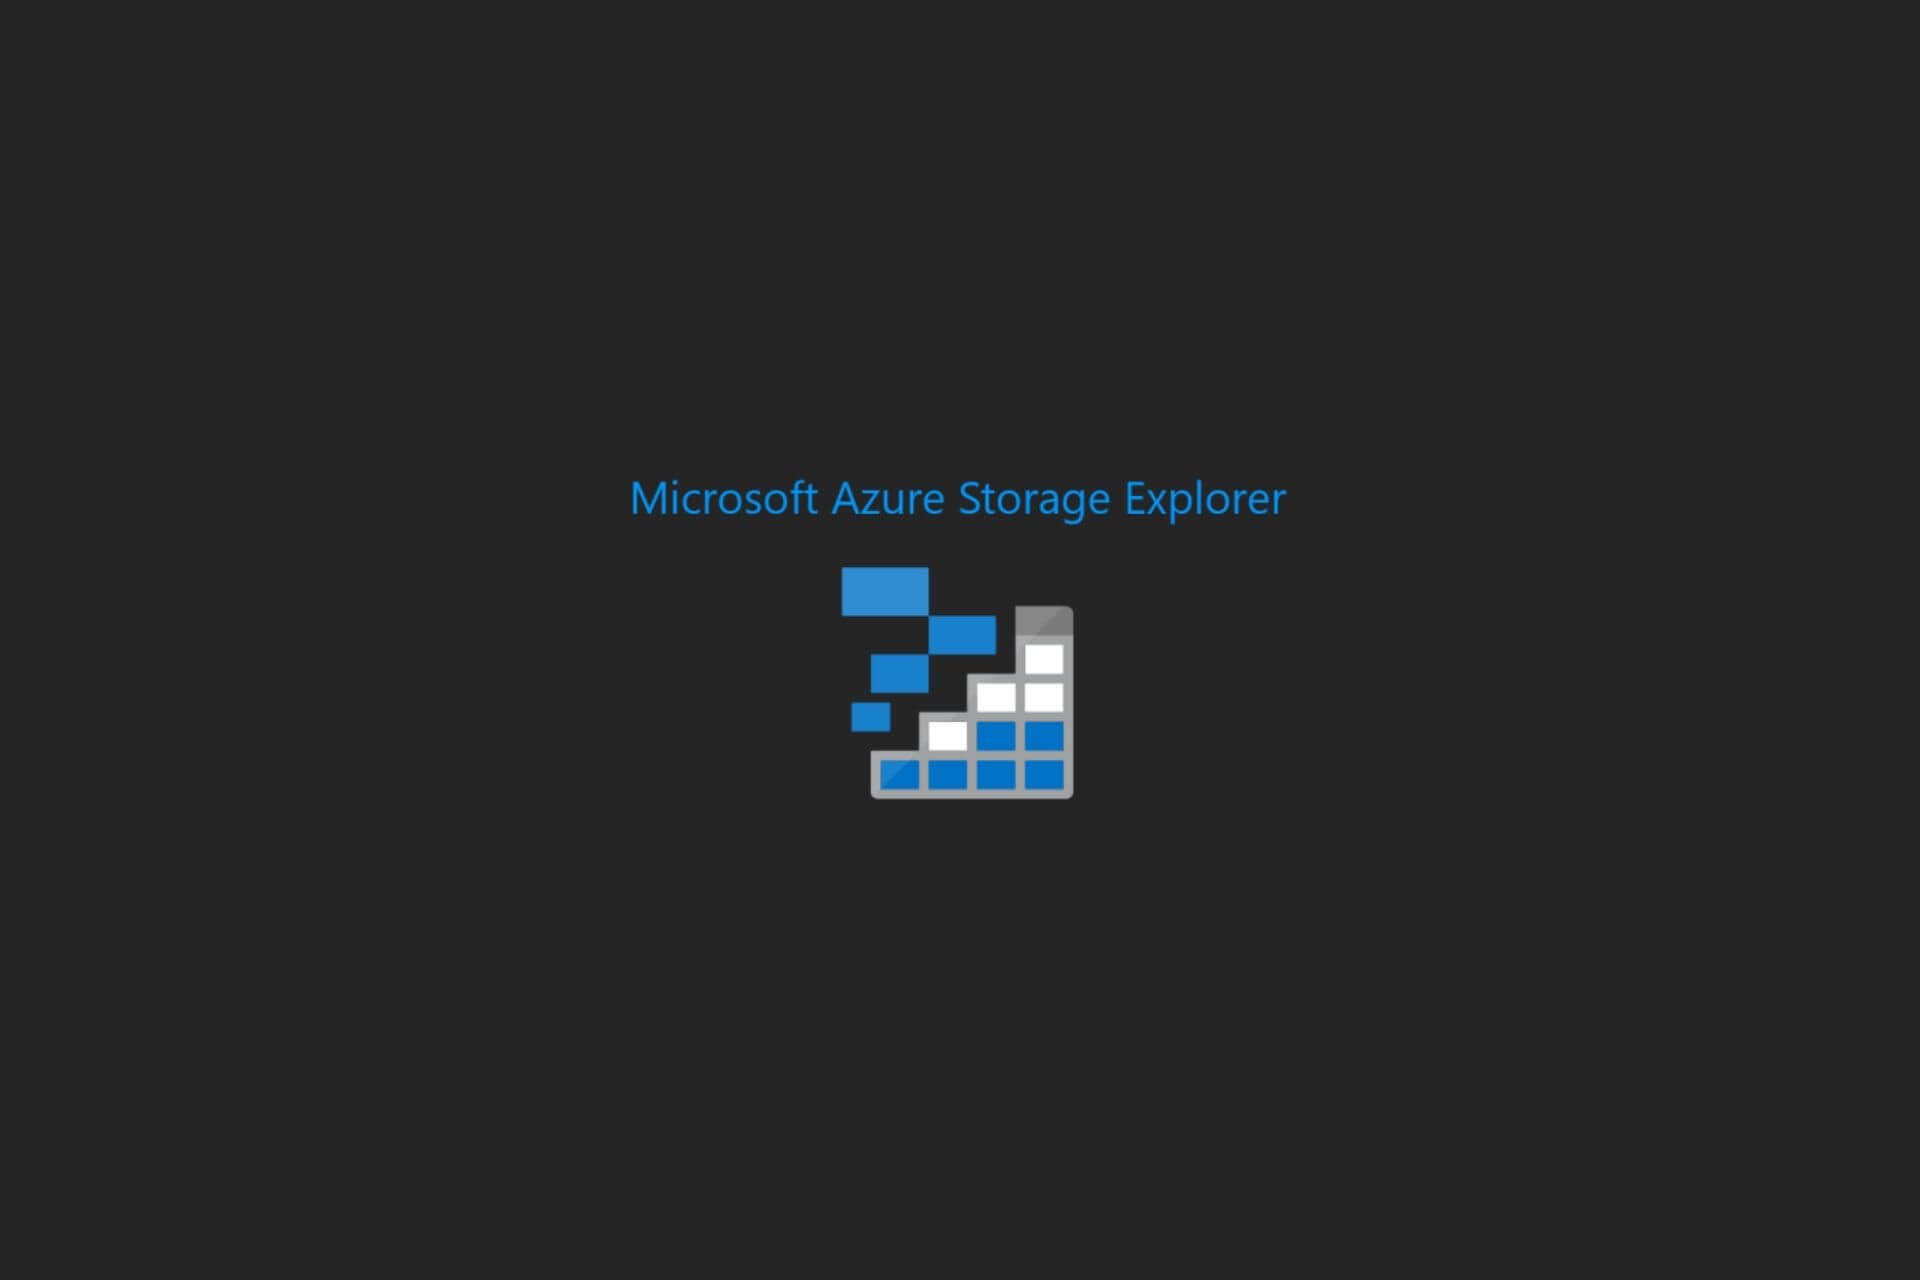 Microsoft azure storage explorer free download for windows 10 a promised land barack obama pdf download free